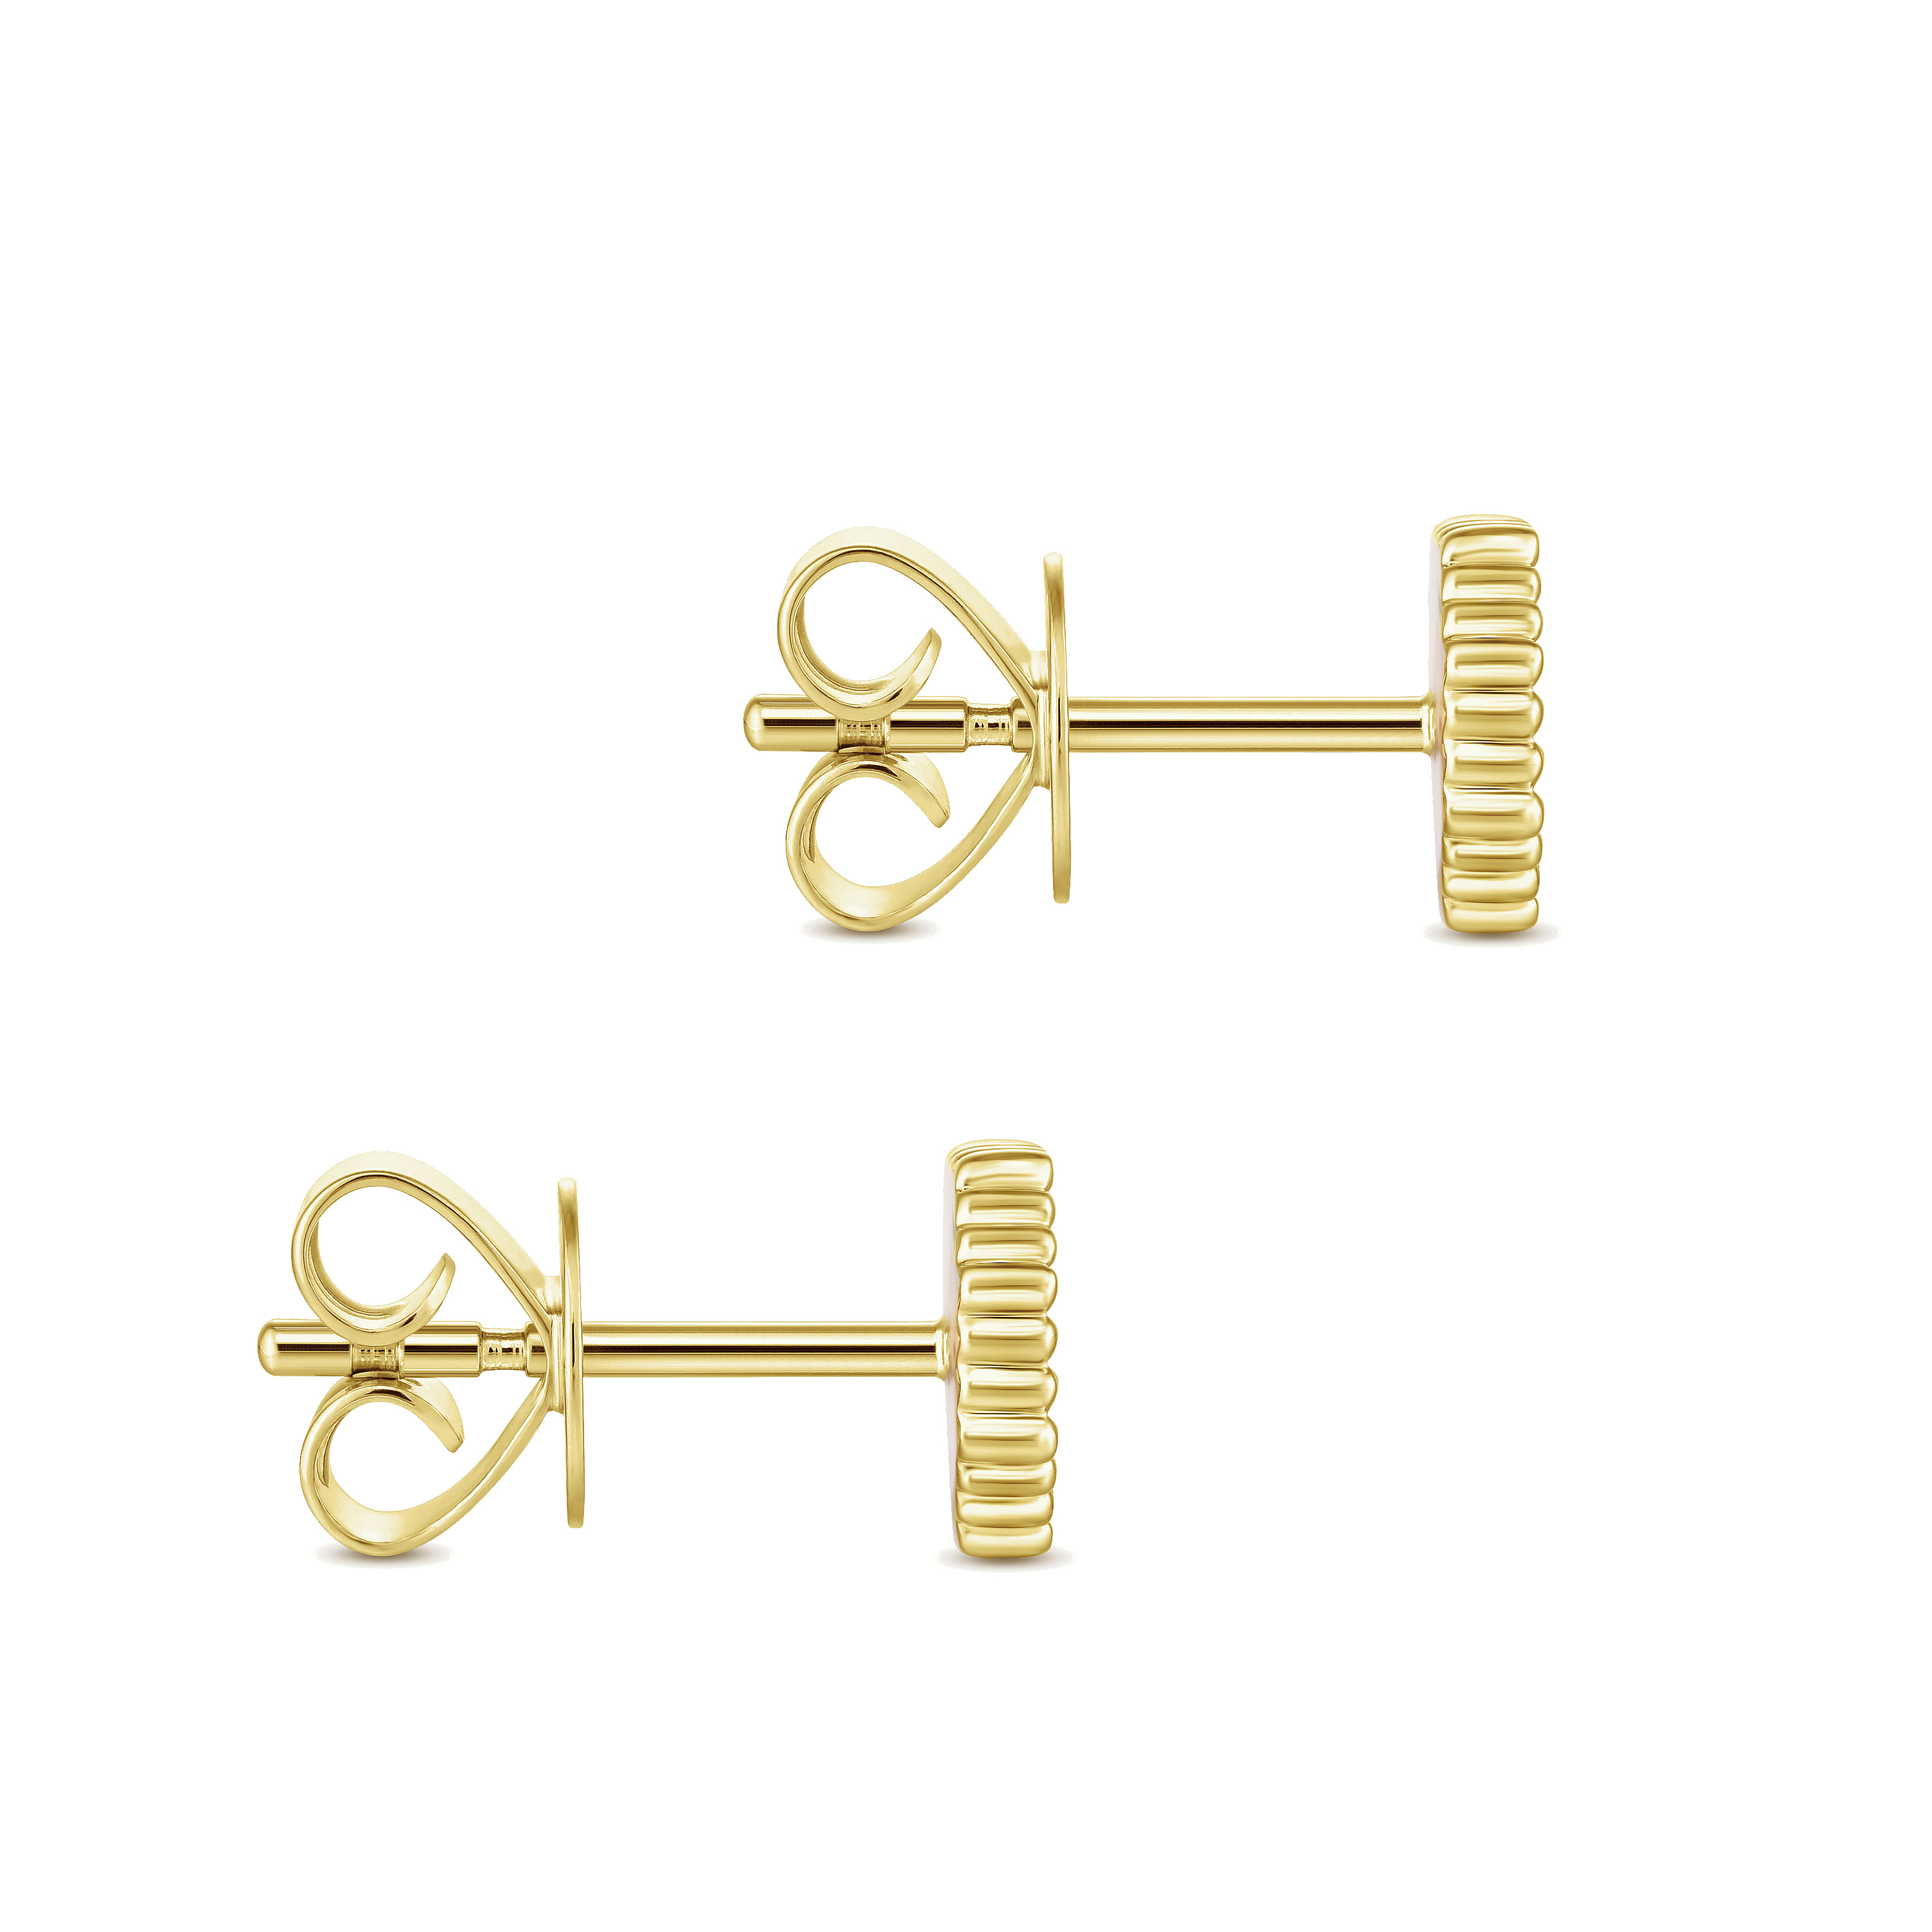 14K Yellow Gold Octagonal Pavé Diamond Cluster Stud Earrings